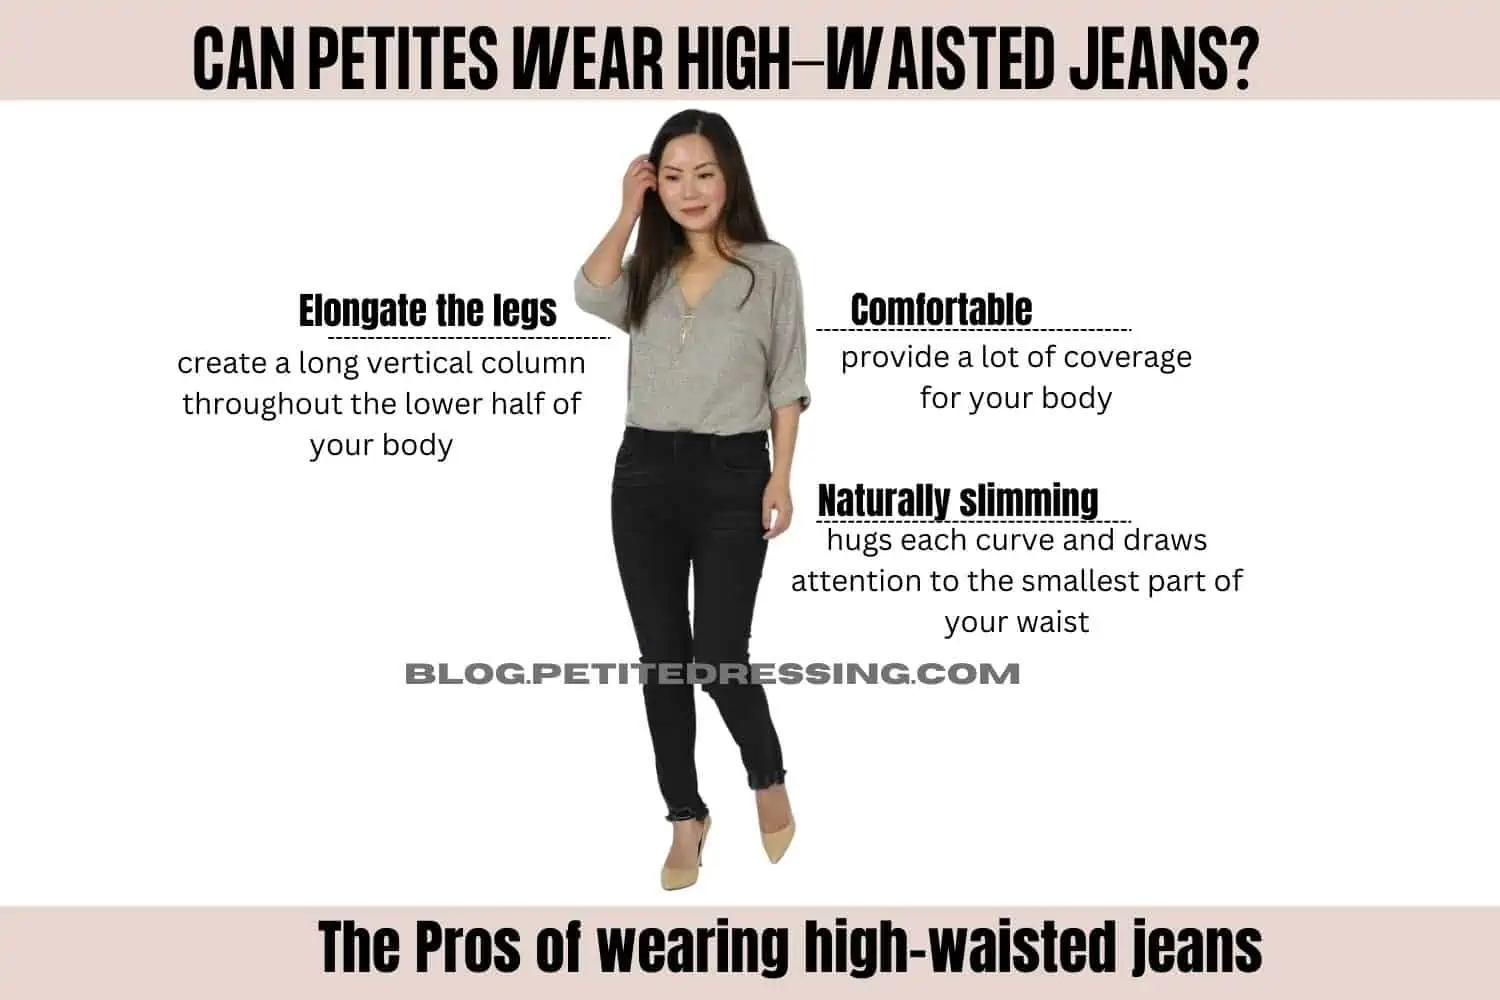 Women's Petite Clothing - Dresses, Pants, Tops & More | Blair